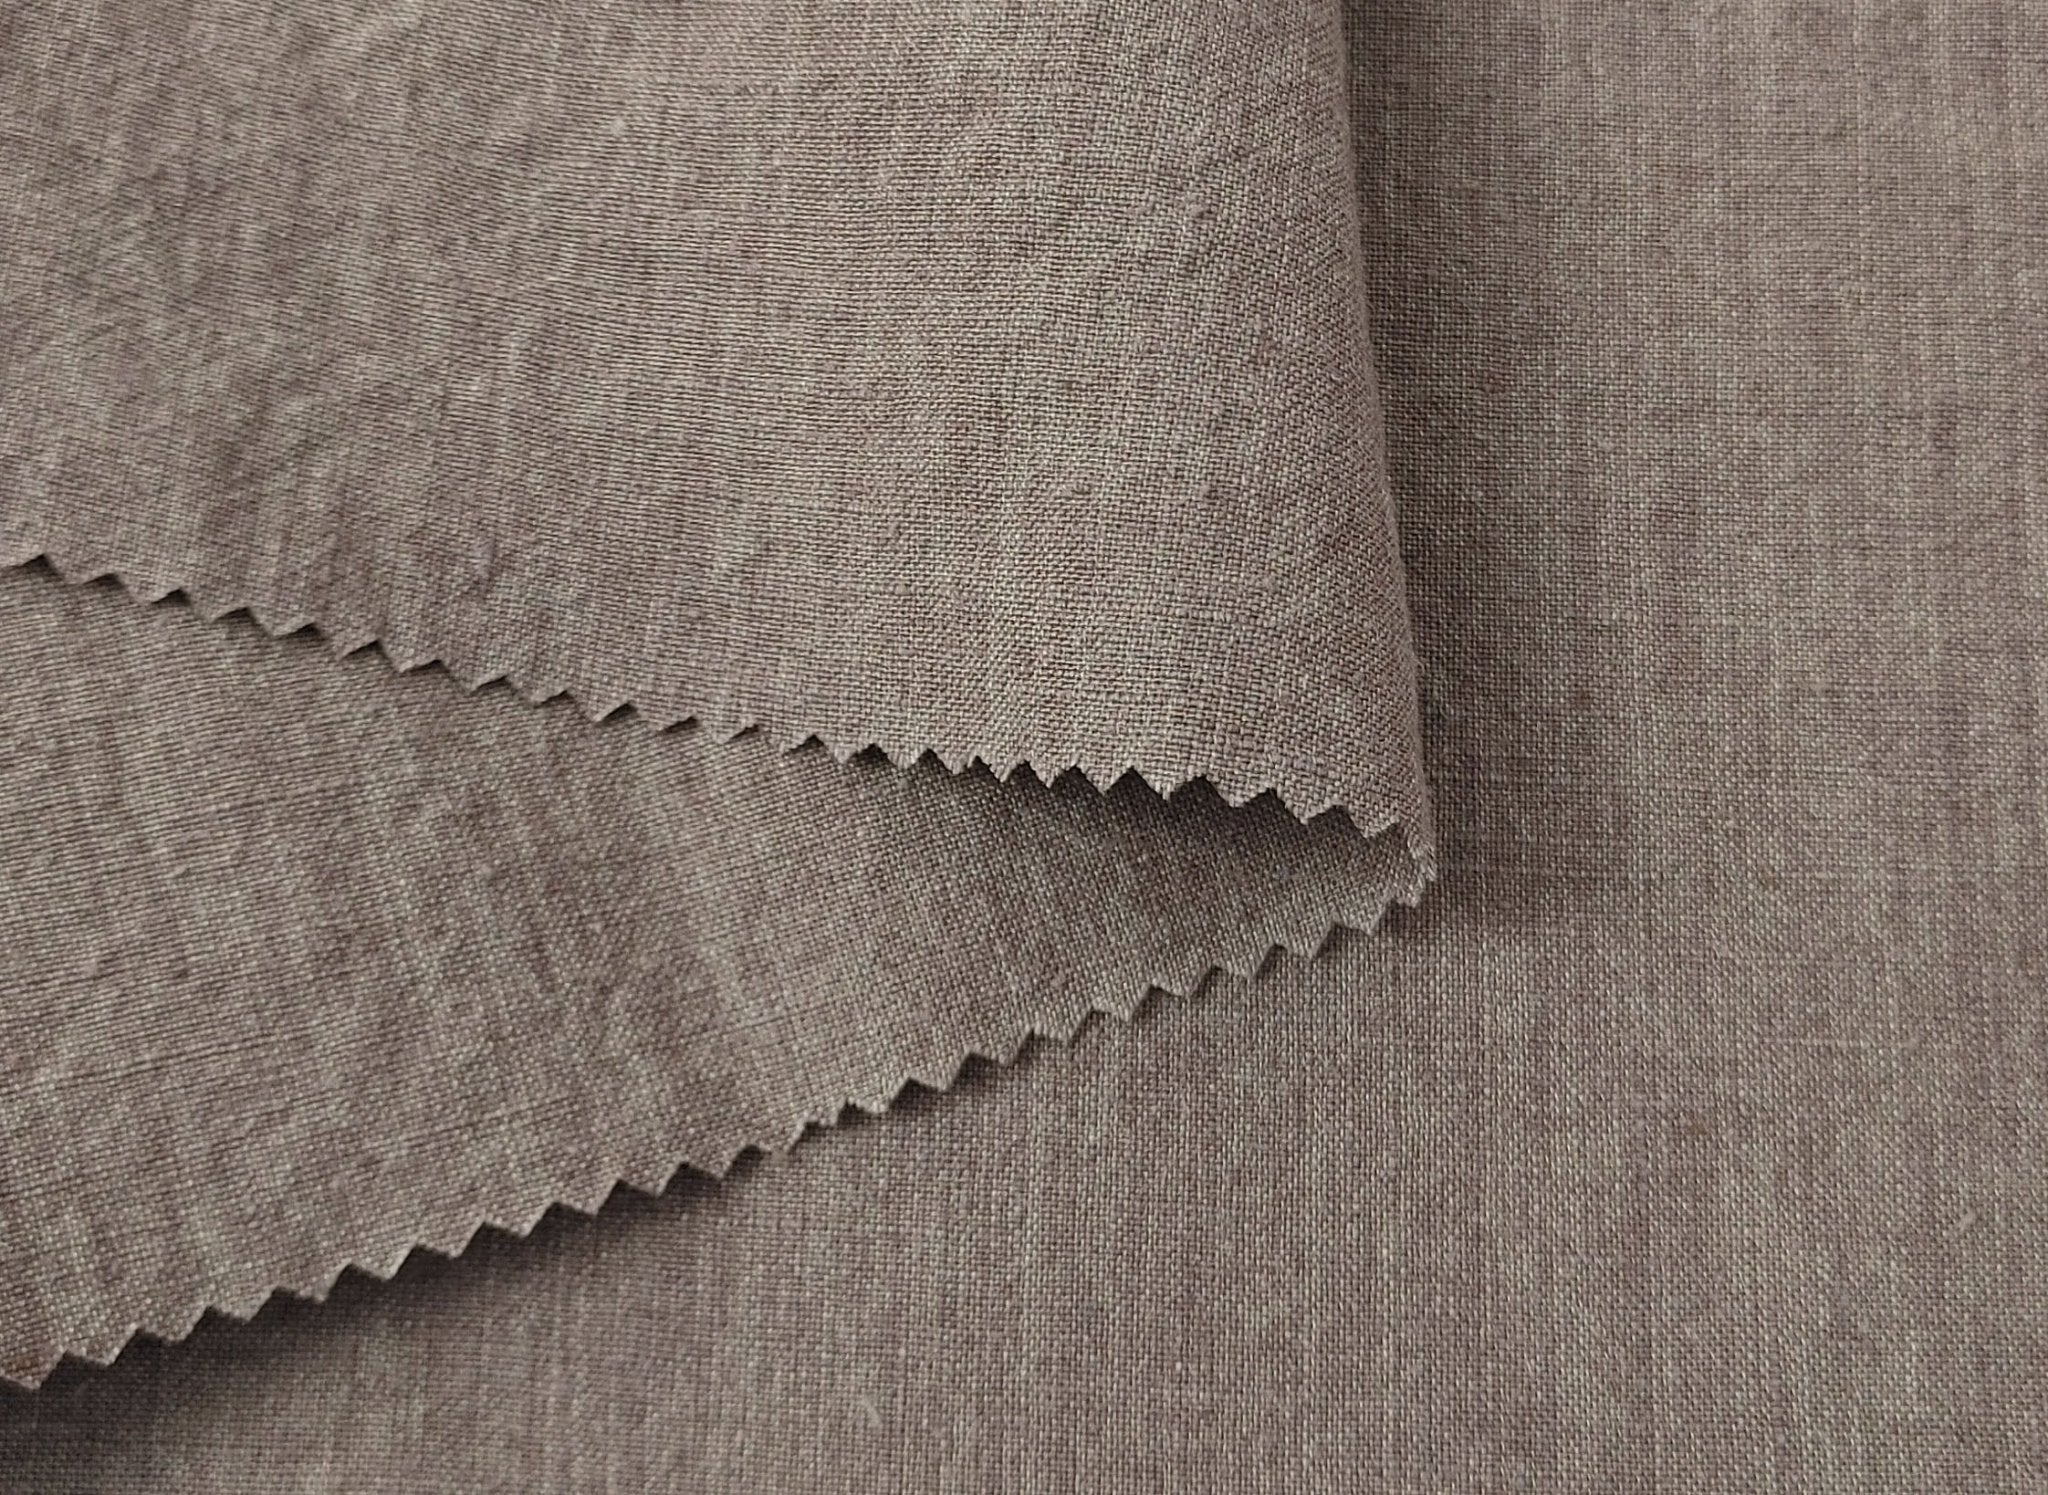 Vintage Dyed Medium Weight Linen Ramie Cotton Fabric with Plain Weave 7820 7771 7770 7819 - The Linen Lab - Khaki(Light)